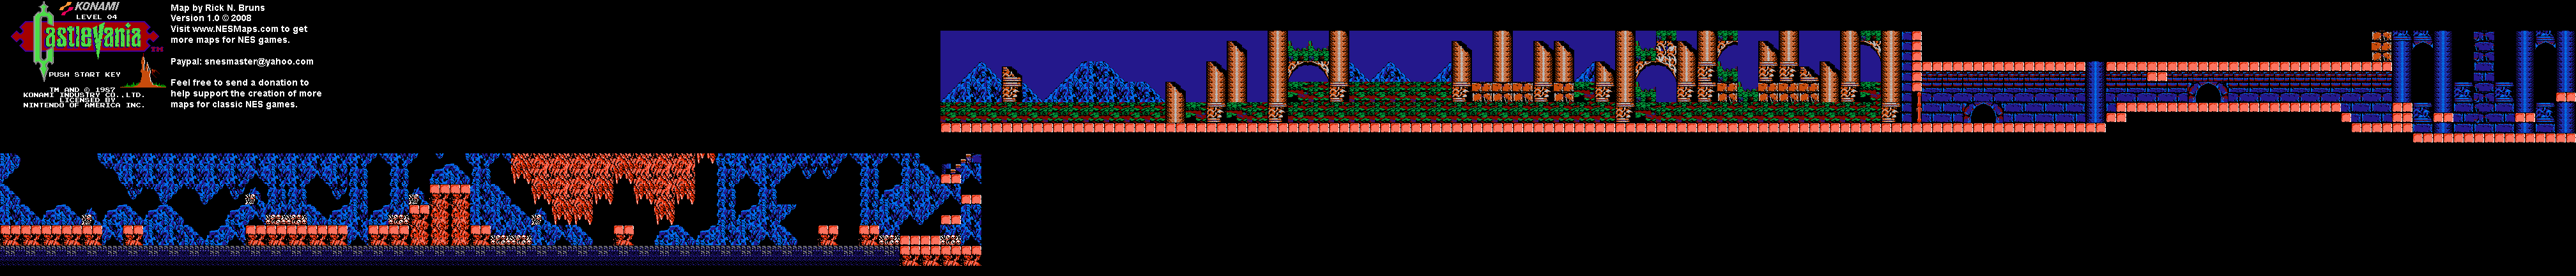 Castlevania - Level 4 Nintendo NES Background Only Map